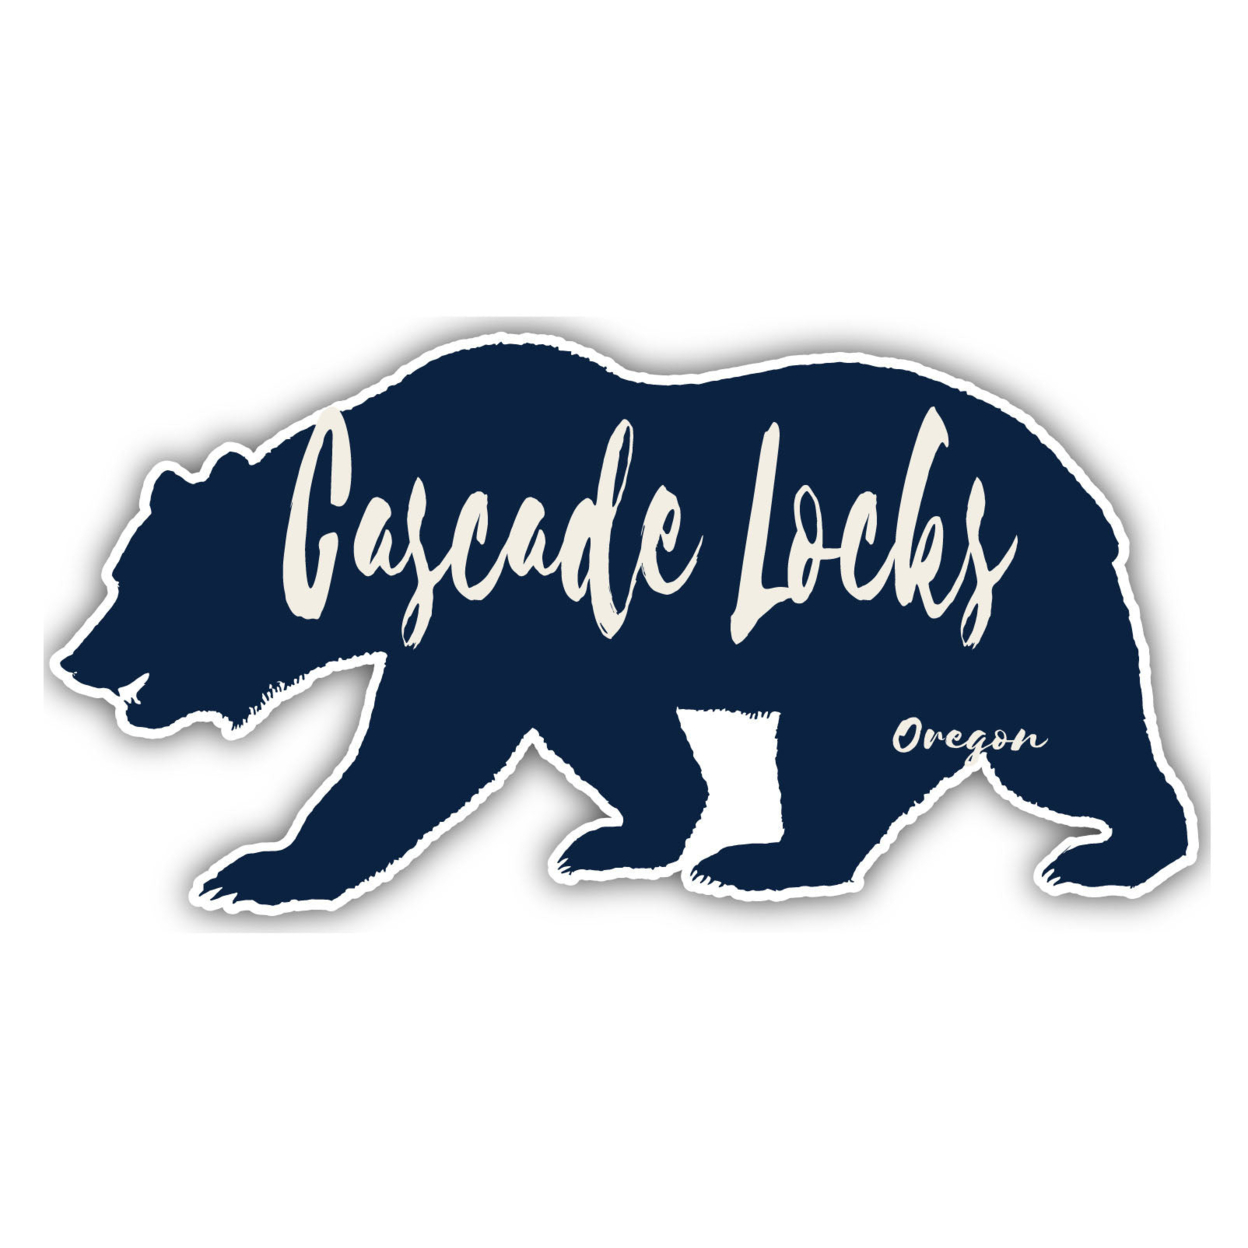 Cascade Locks Oregon Souvenir Decorative Stickers (Choose Theme And Size) - 4-Pack, 6-Inch, Tent